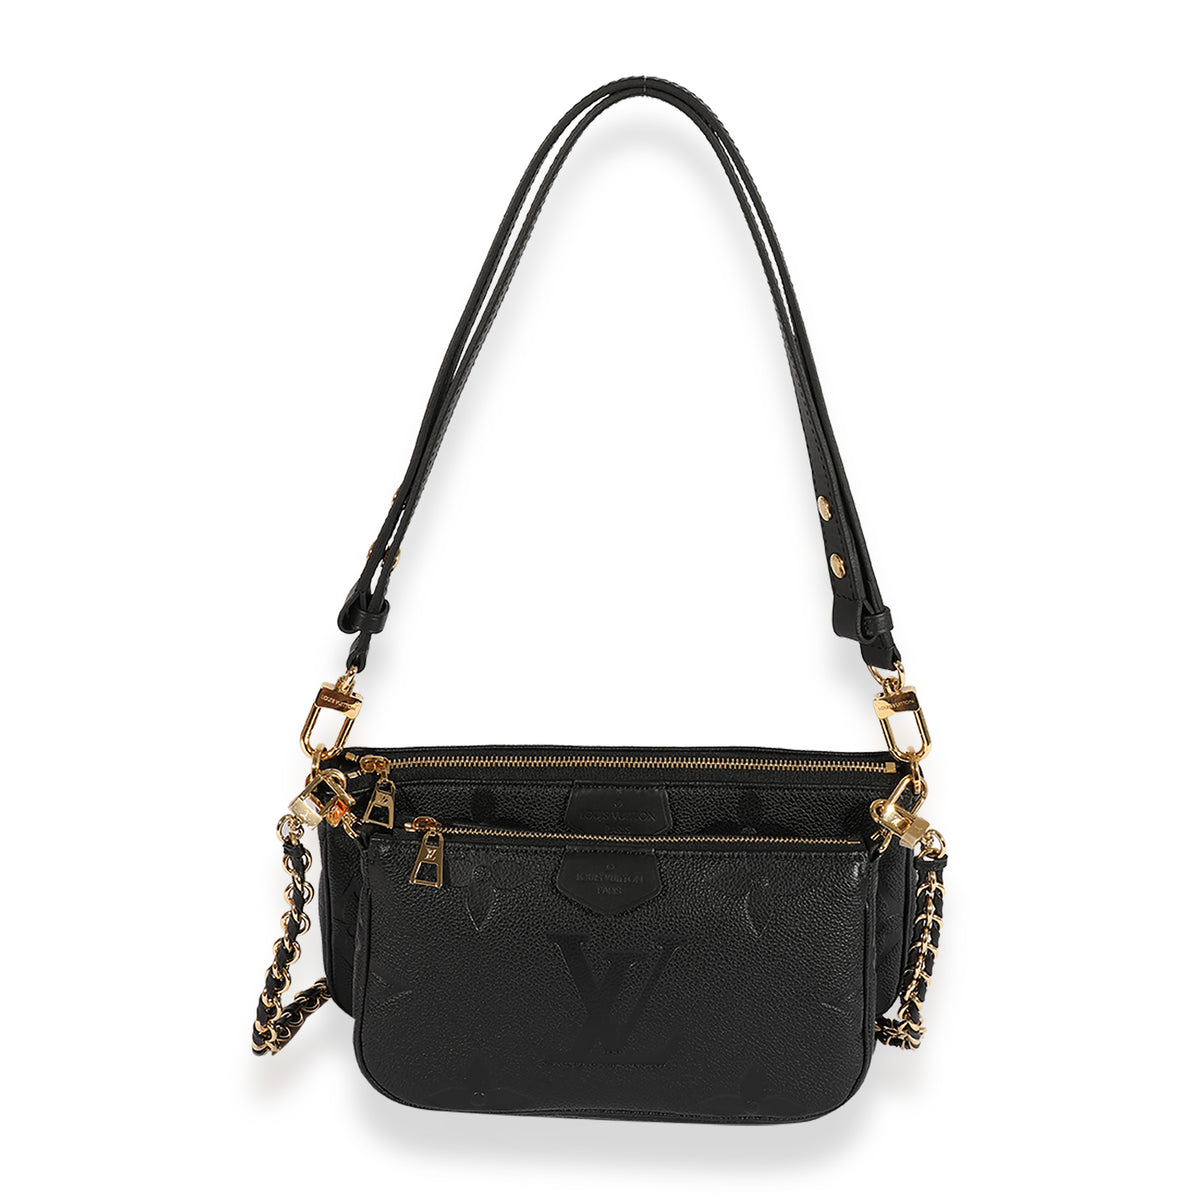 Louis Vuitton Empreinte Multi Pochette - Why I exchanged my bag